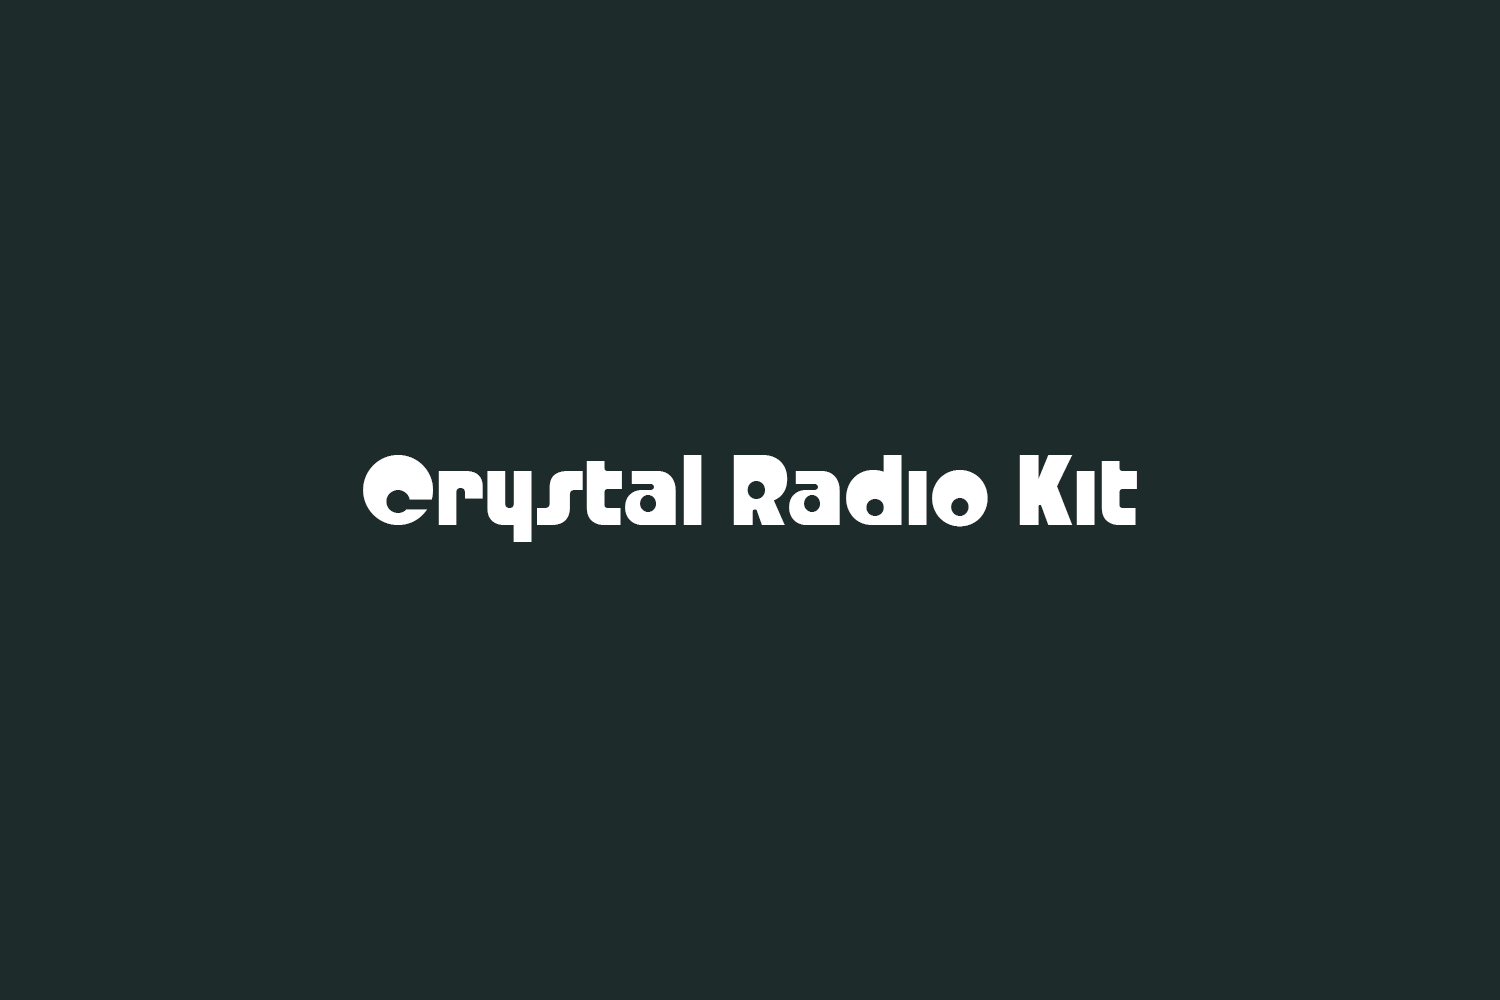 Crystal Radio Kit Free Font